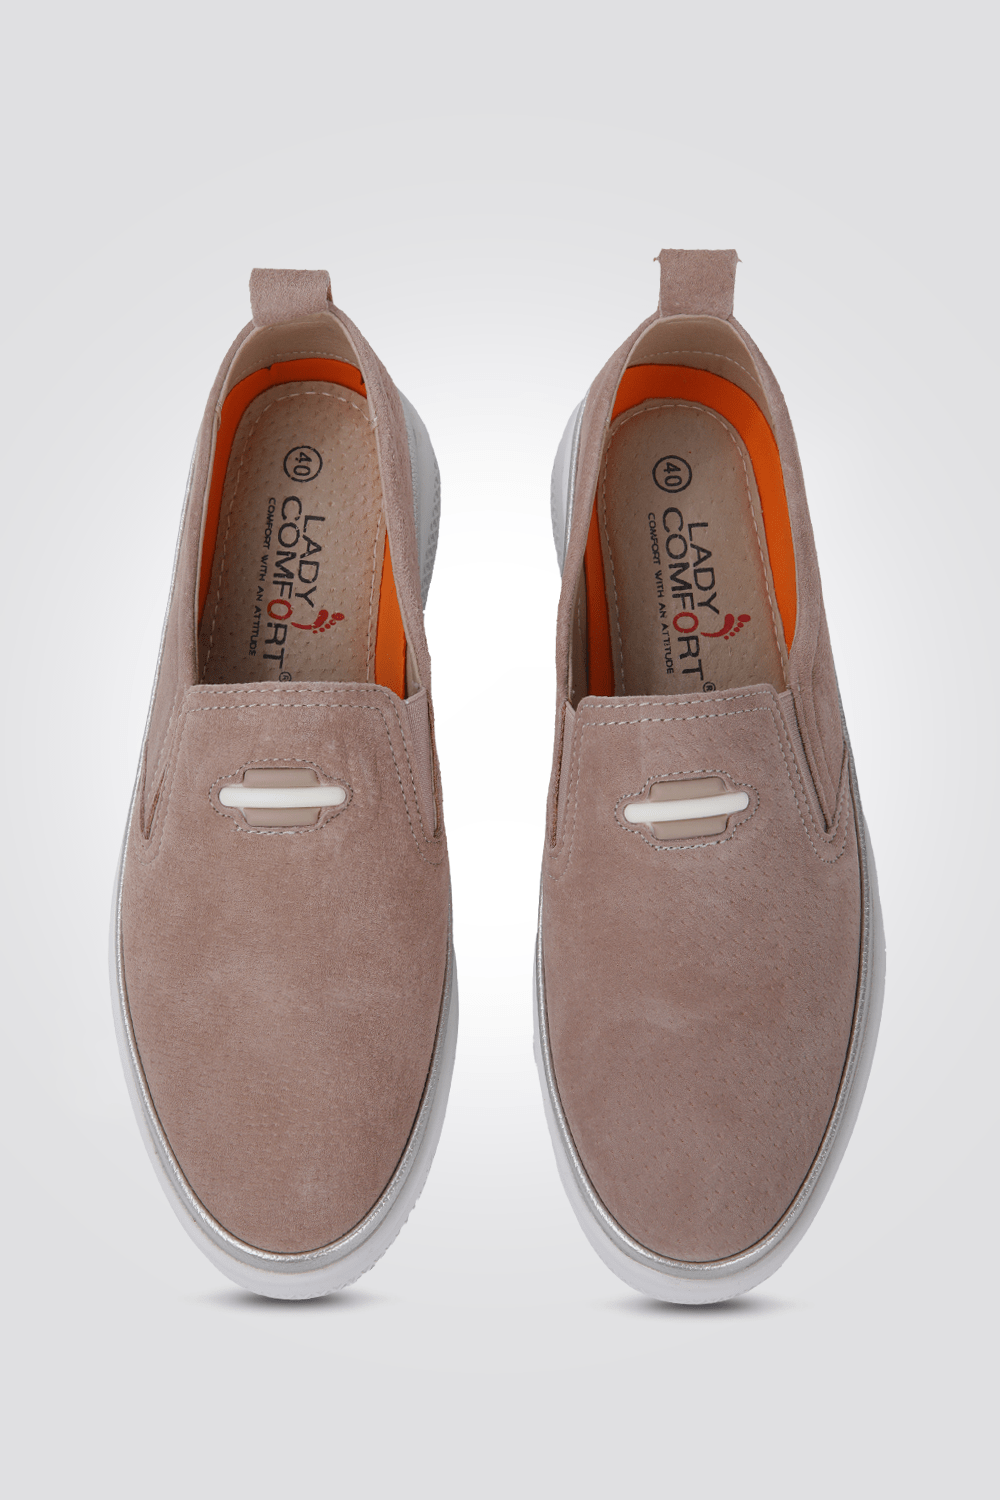 LADY COMFORT - נעל נוחות לנשים בצבע פודרה - MASHBIR//365